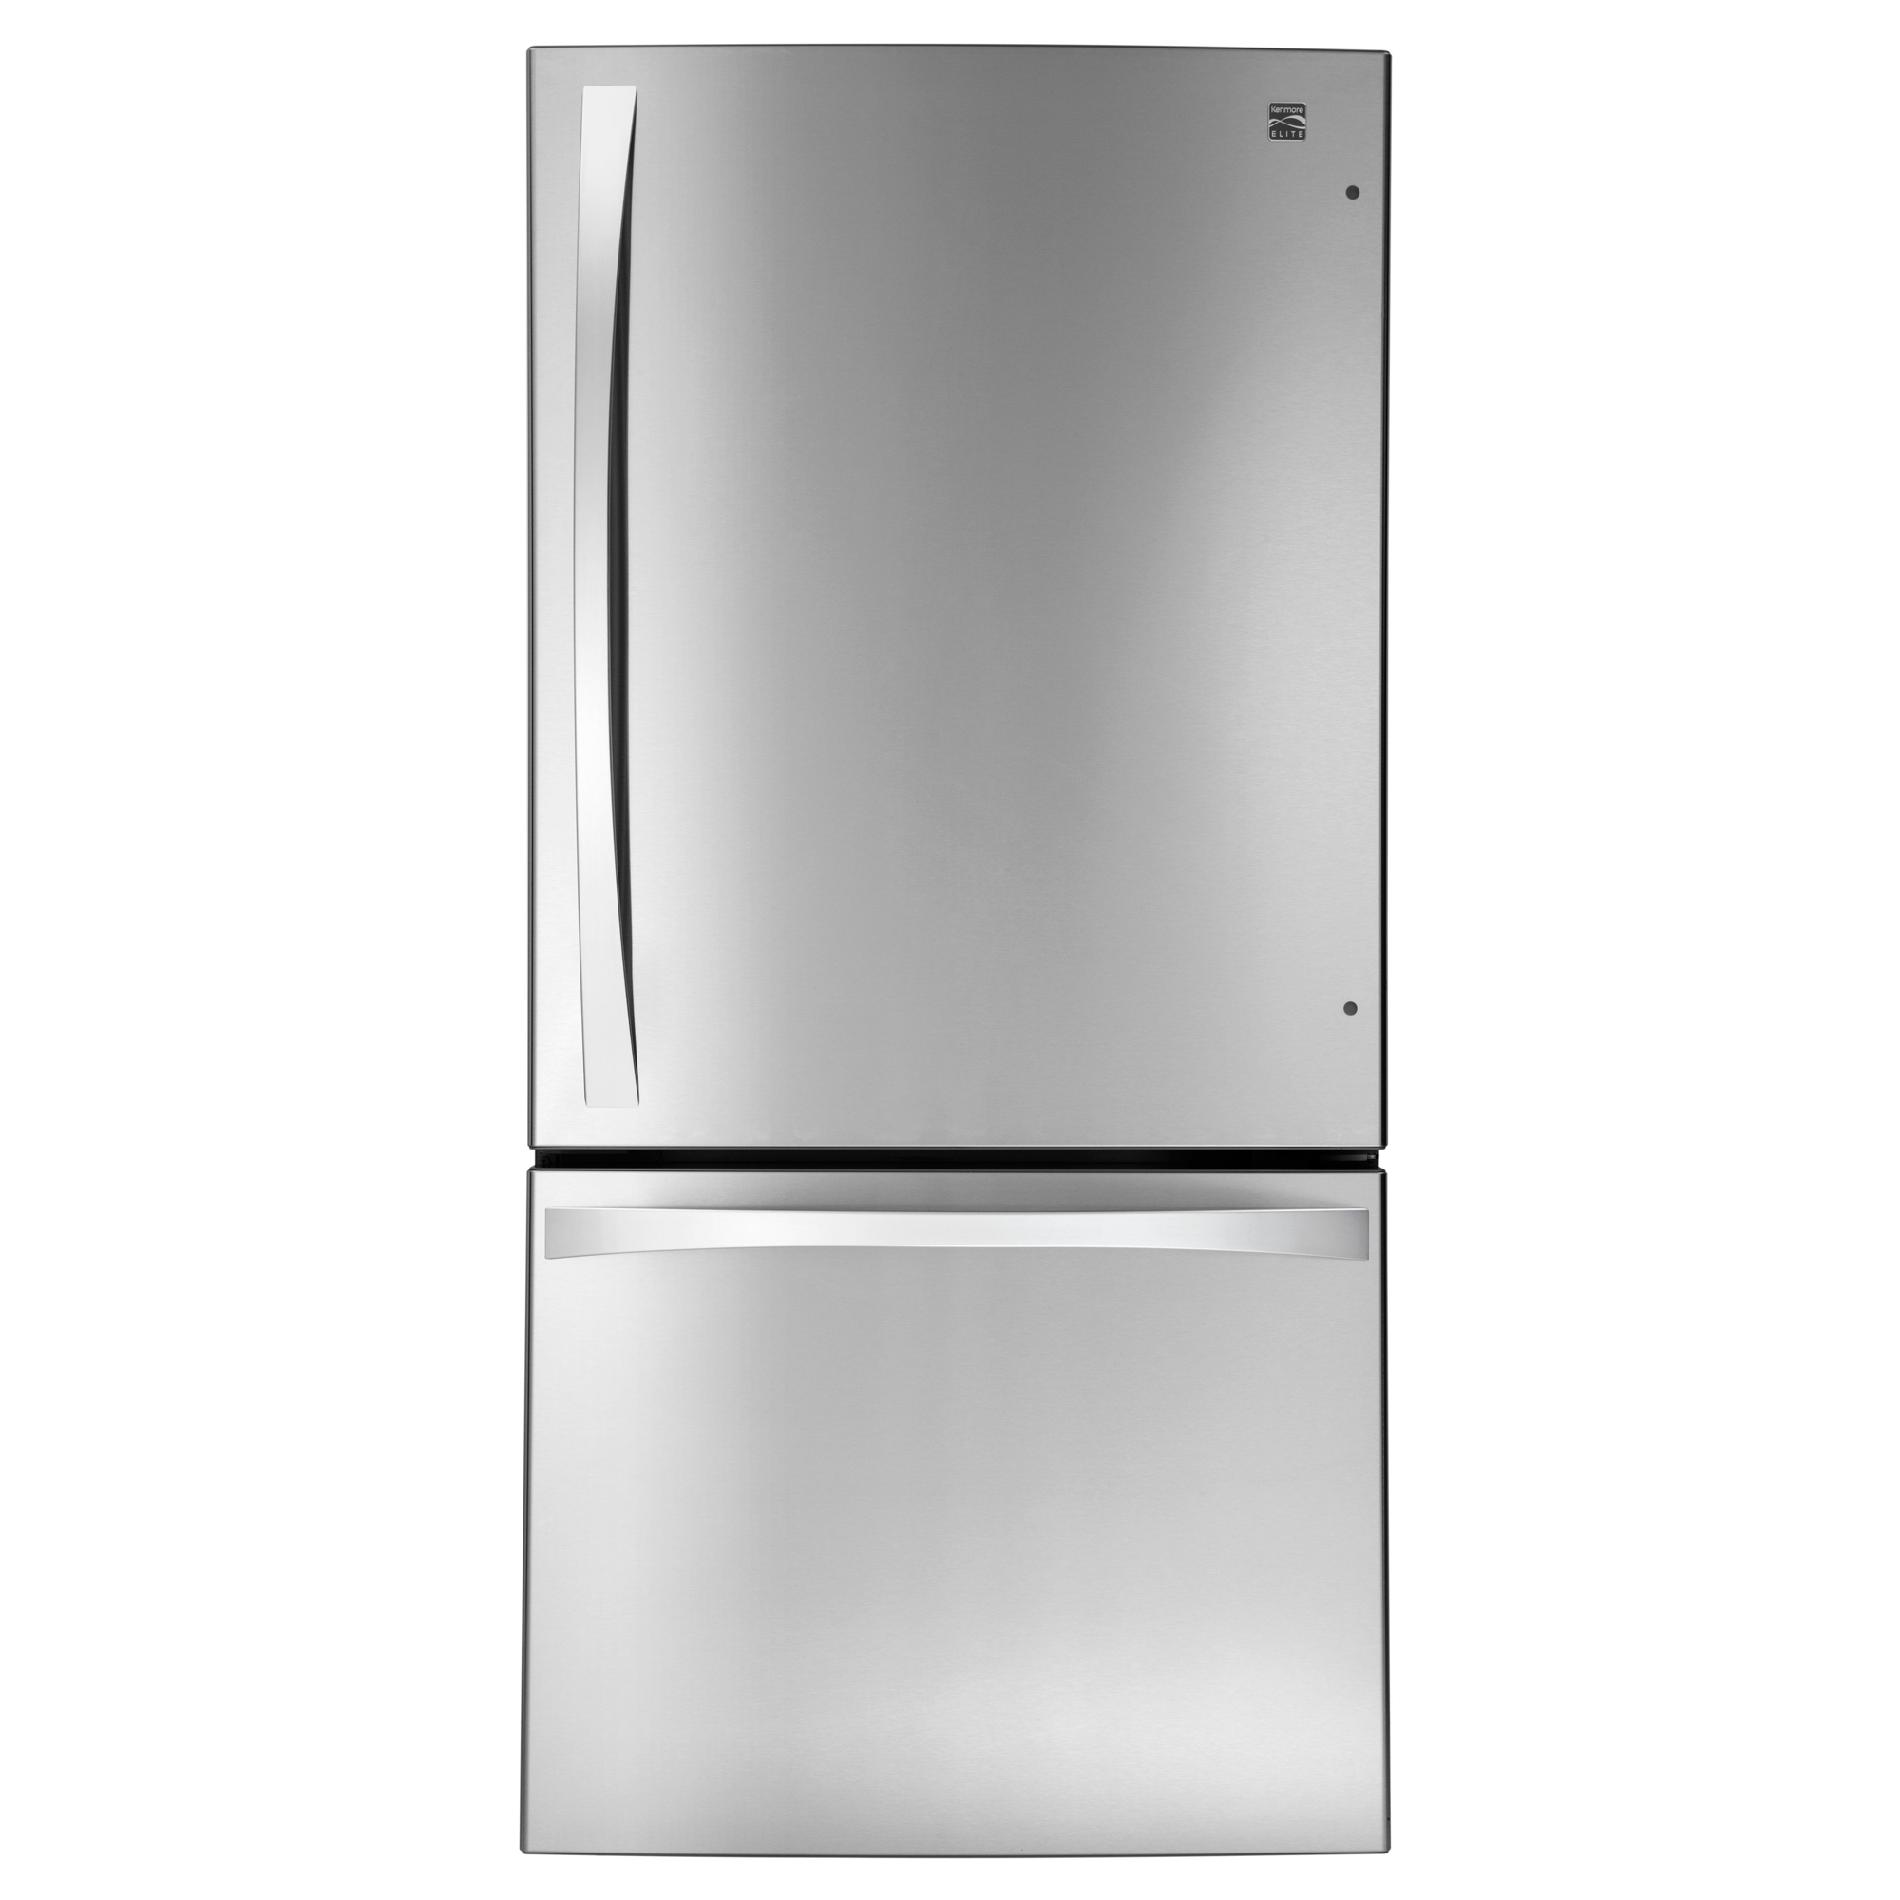 Kenmore Elite 79043 24.1 cu. ft. Stainless Steel Bottom-Freezer Refrigerator